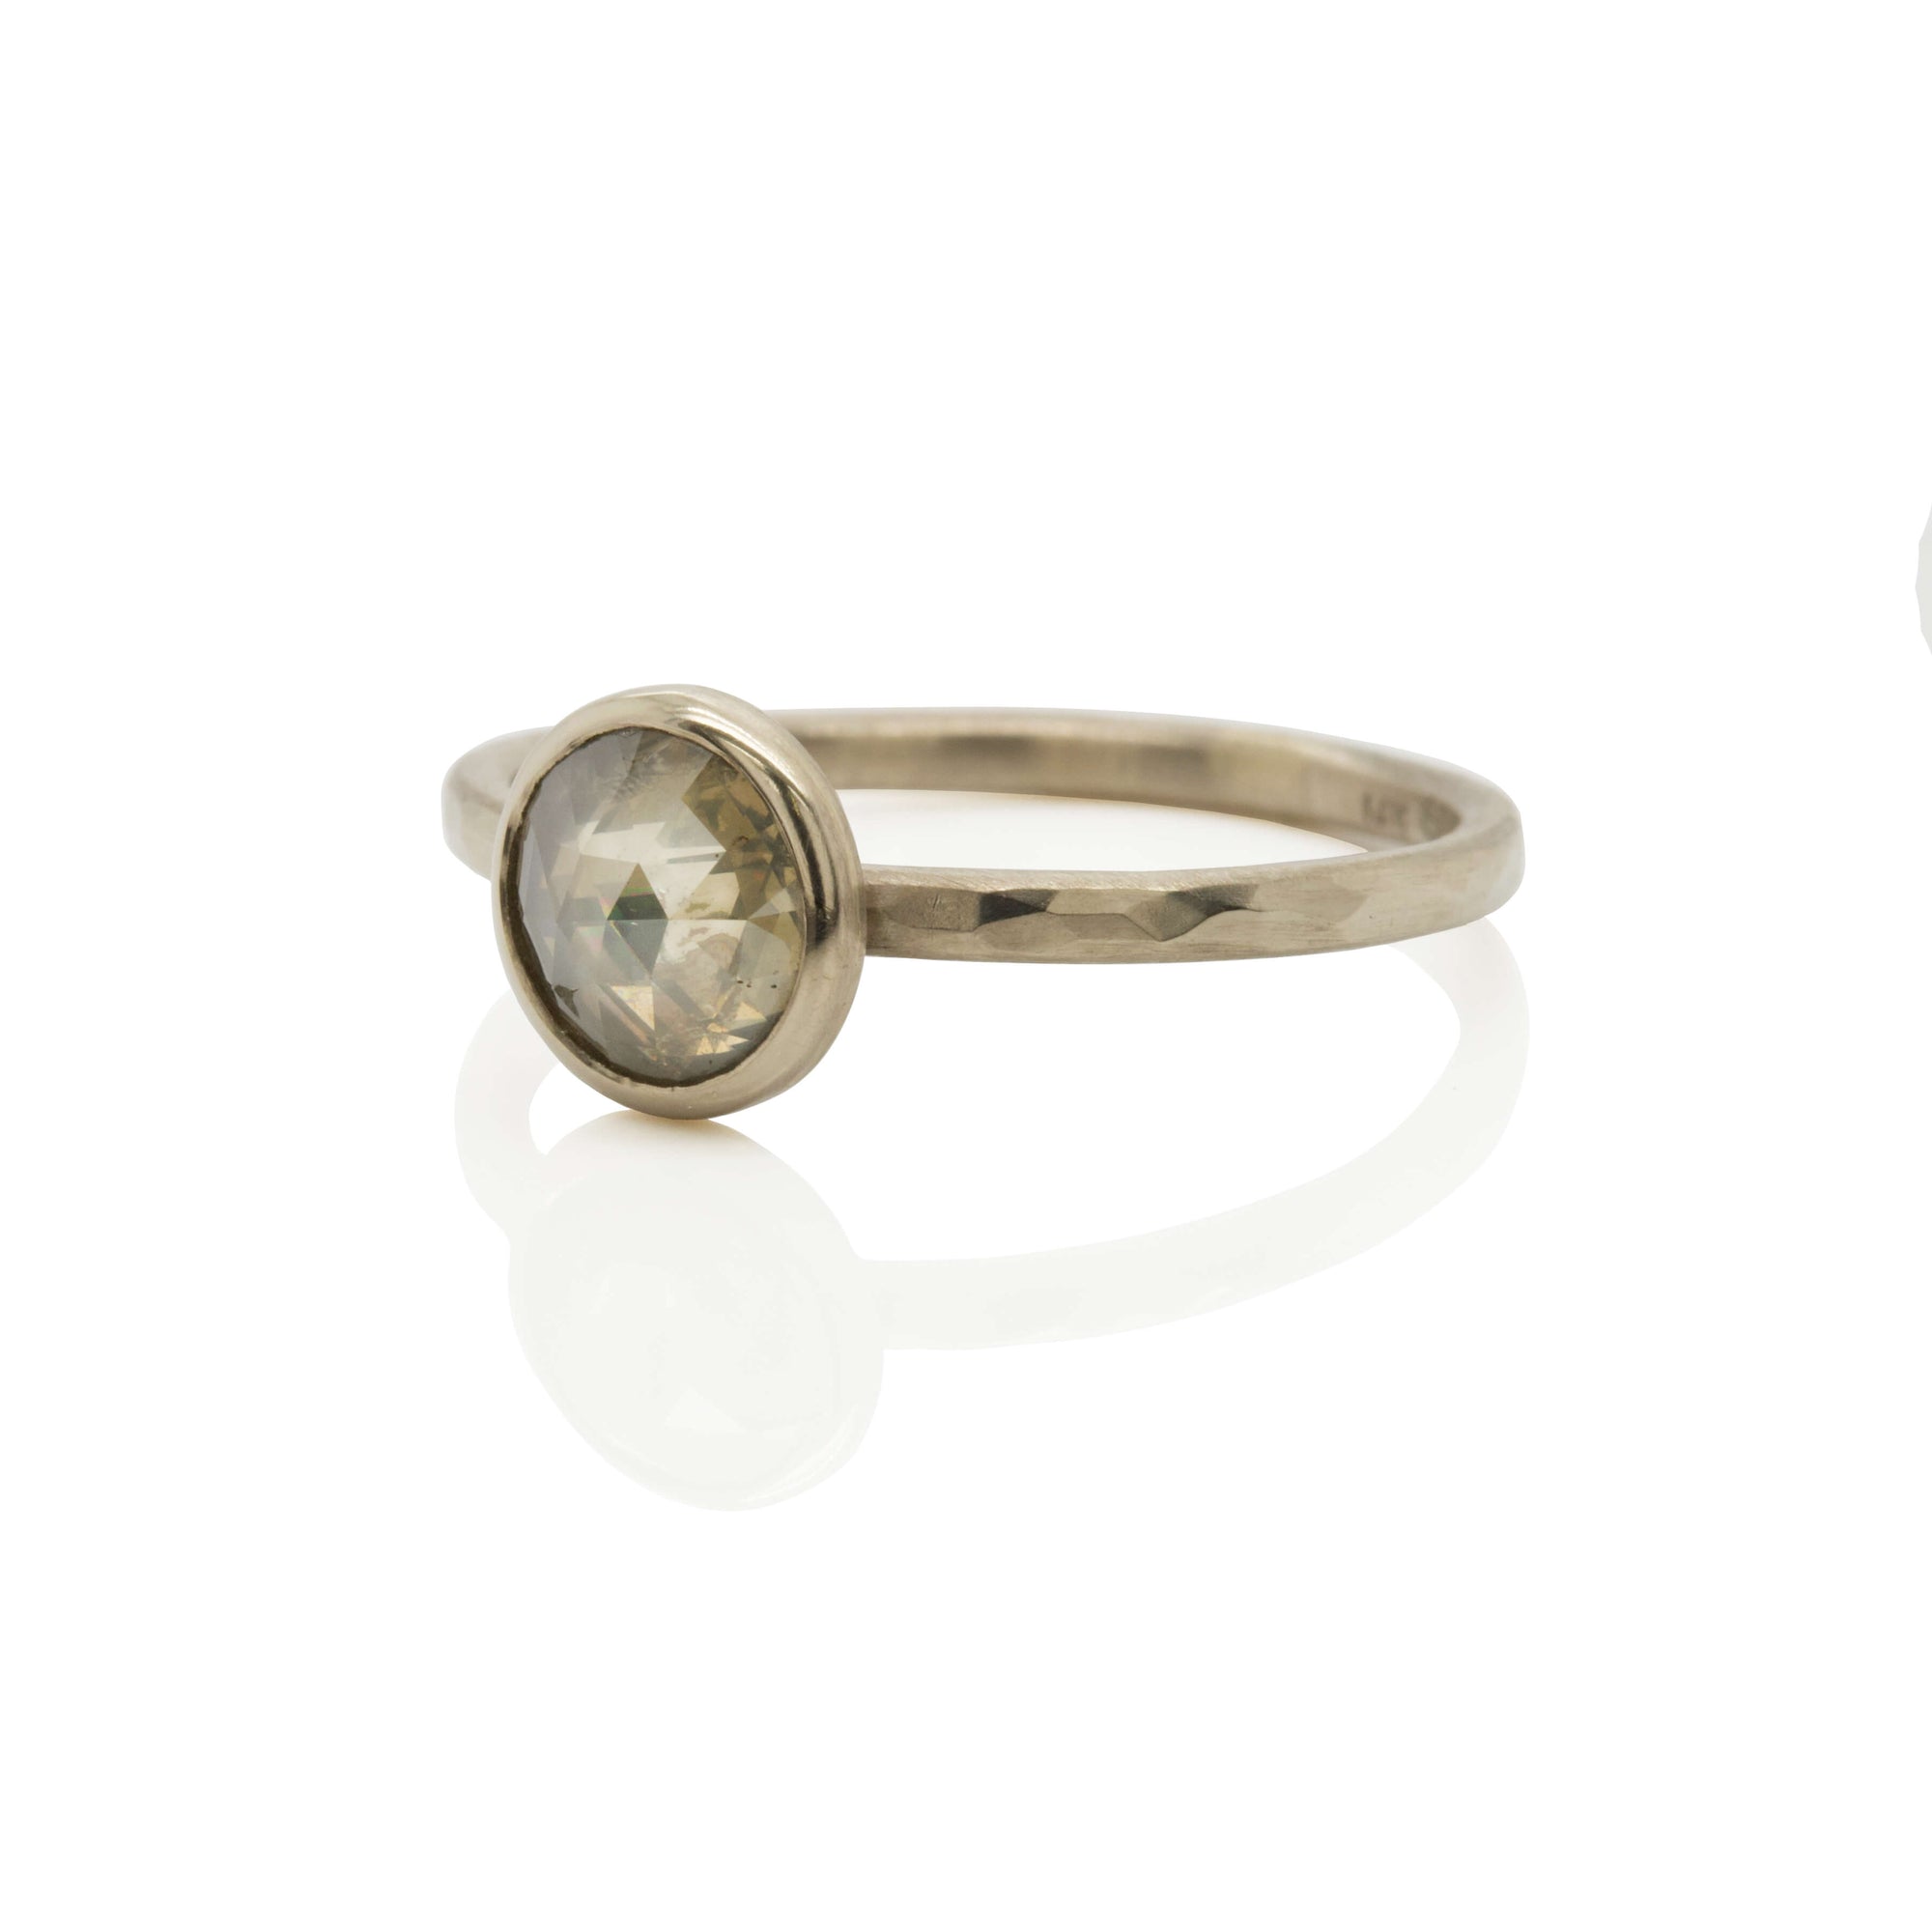 Champagne rose cut diamond engagement ring in palladium white gold.